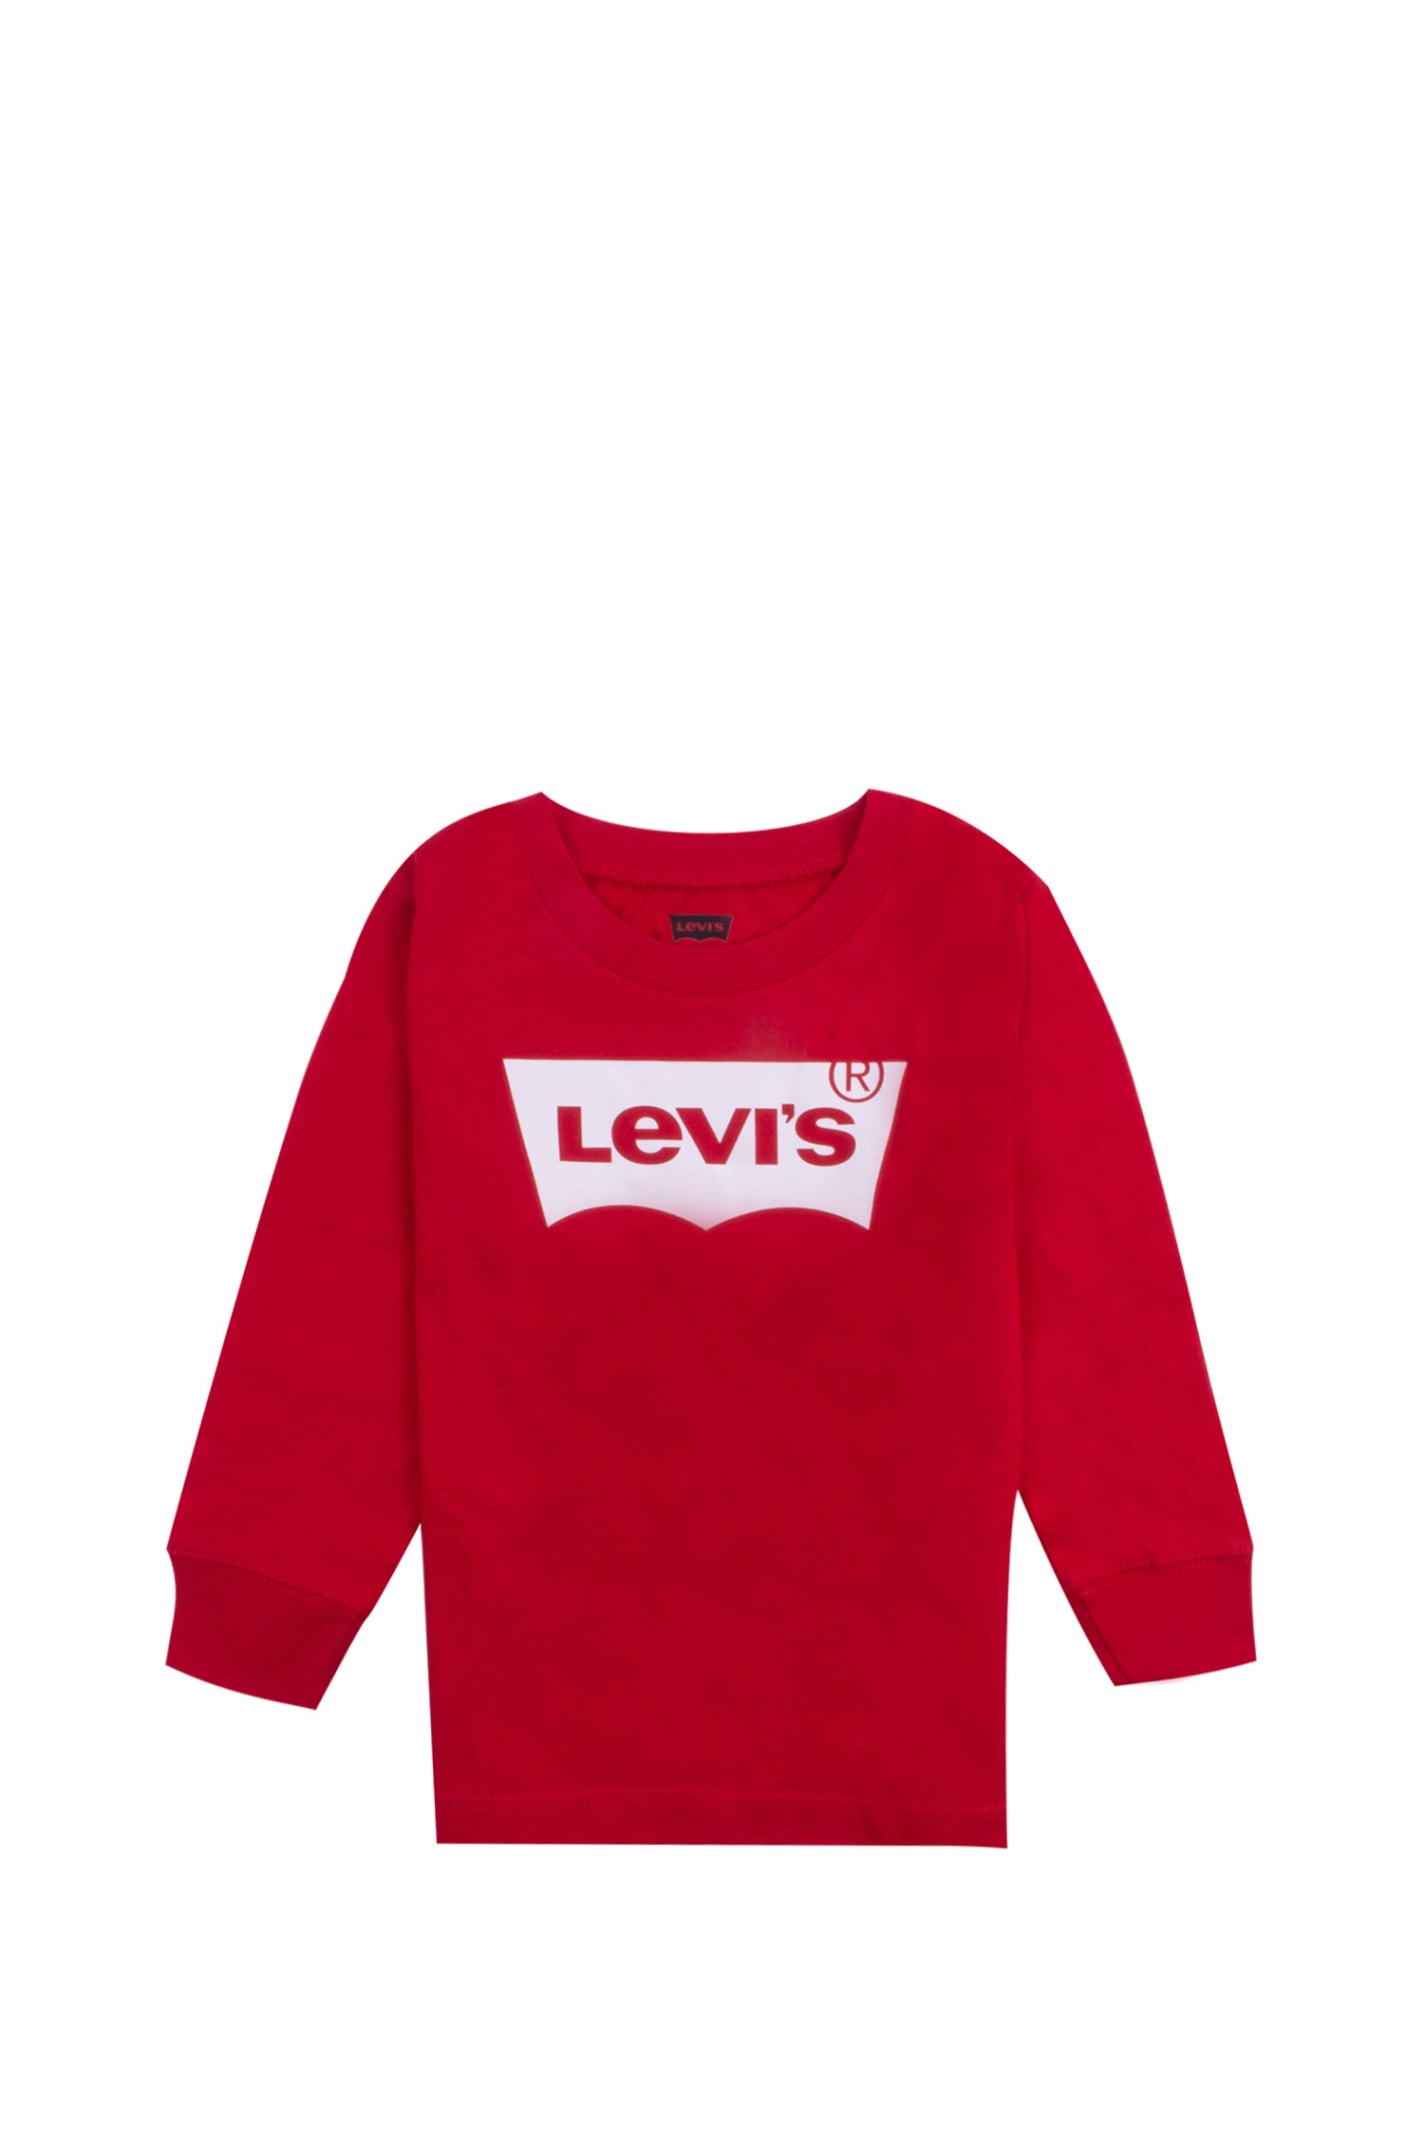 Levi's Cotton Sweater